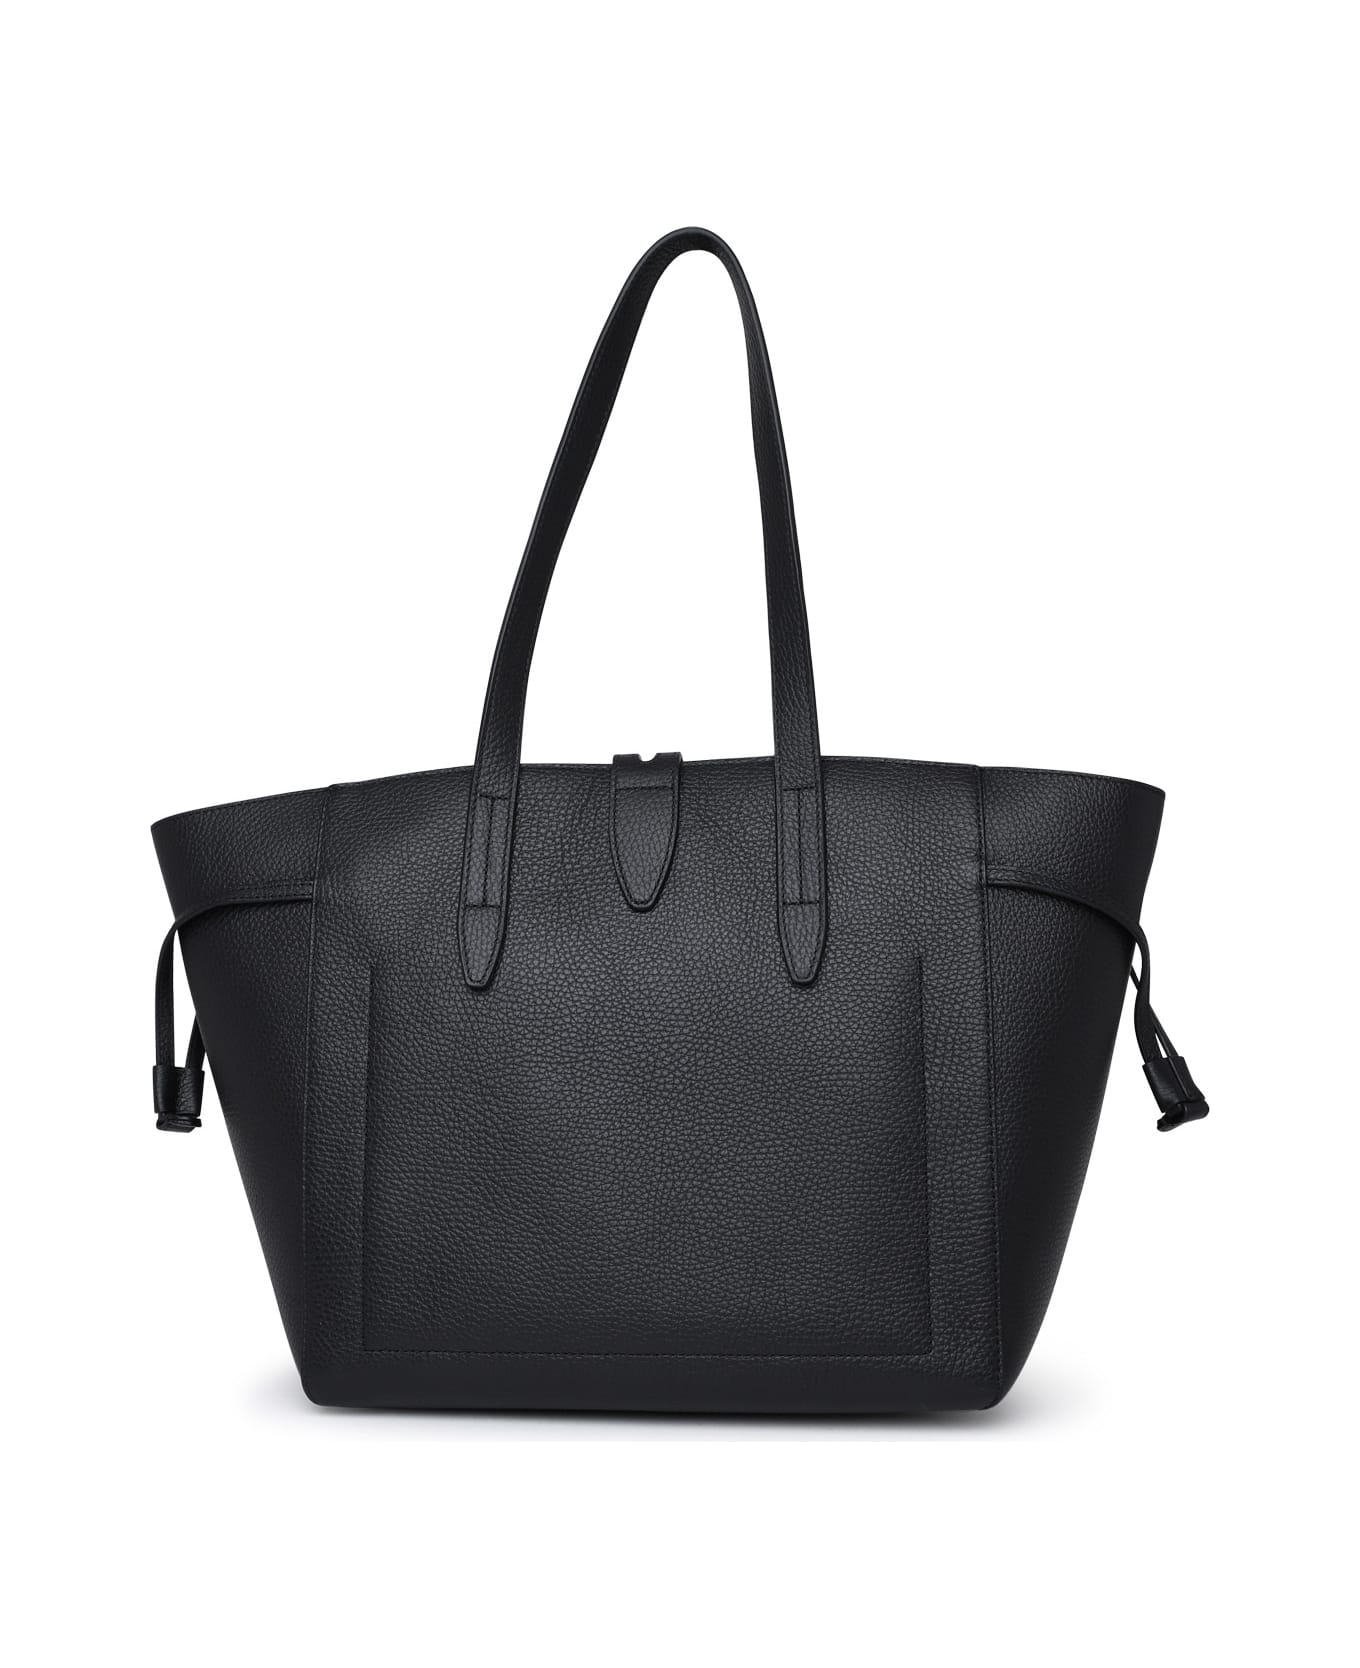 Furla Black Leather Net Large Tote Bag - Nero トートバッグ